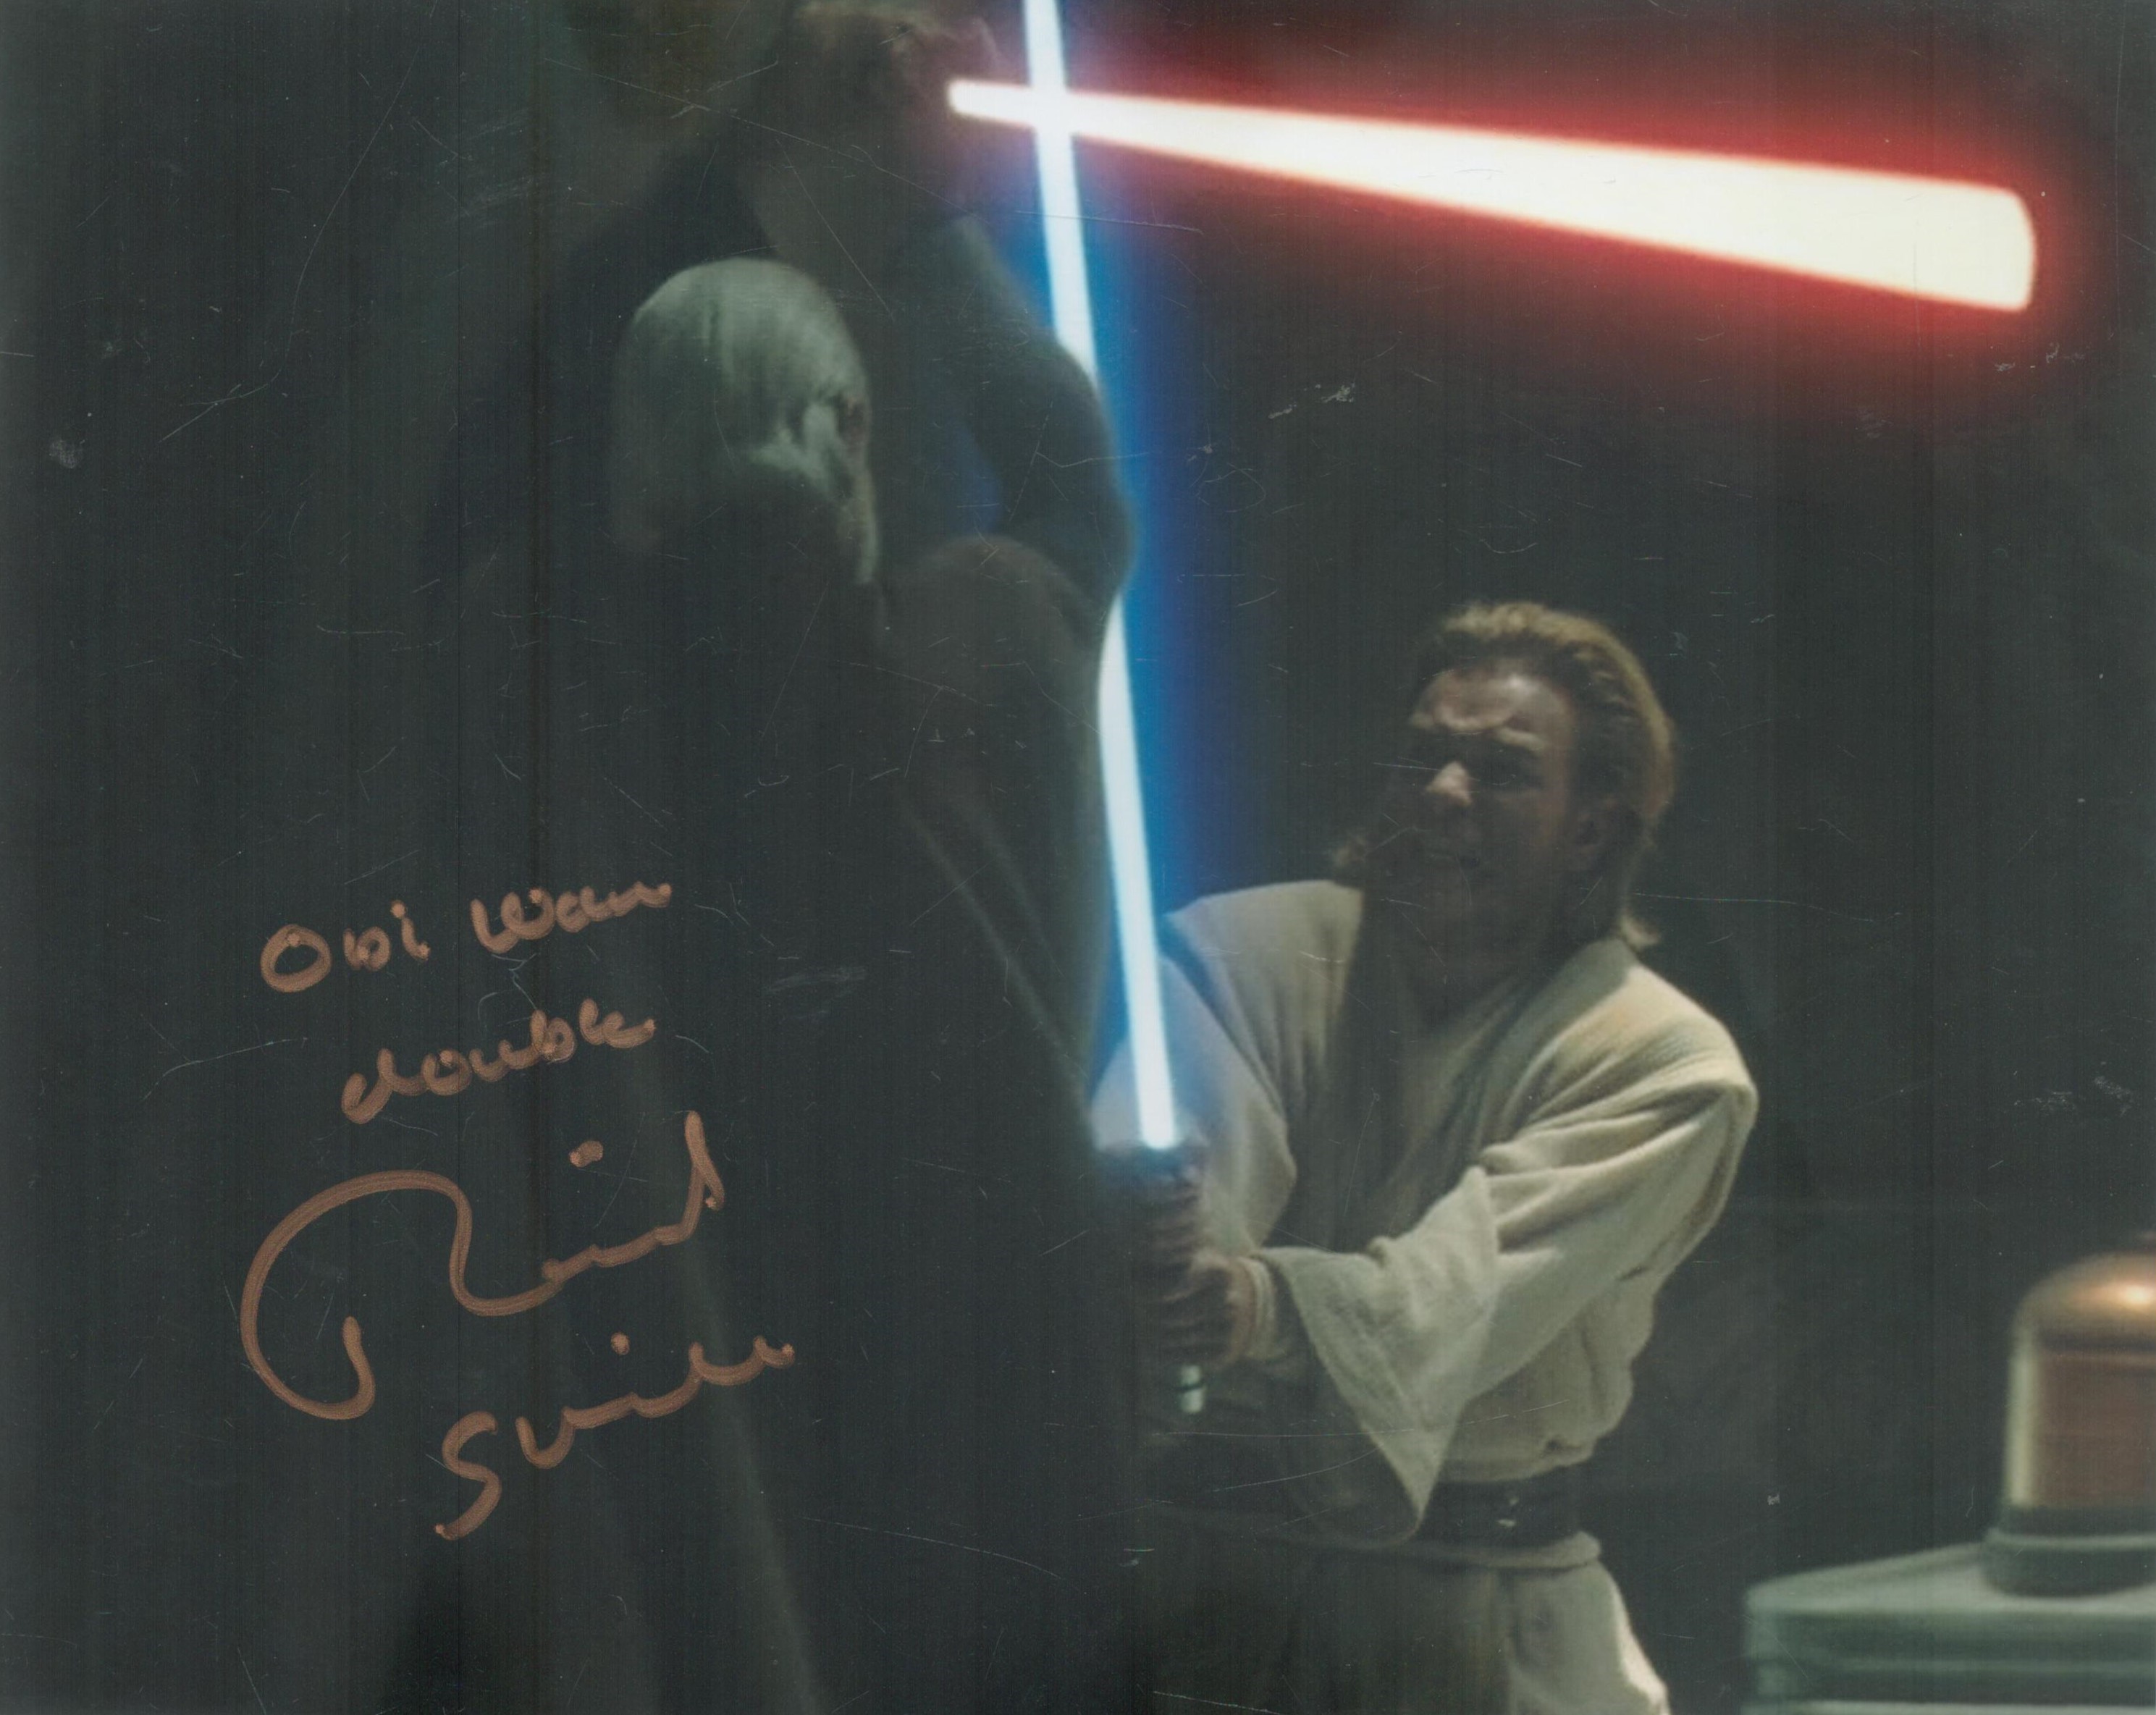 Star Wars Obi Wan fight scene 8 x 10 inch colour movie photo signed by actor Richard Stride. Richard